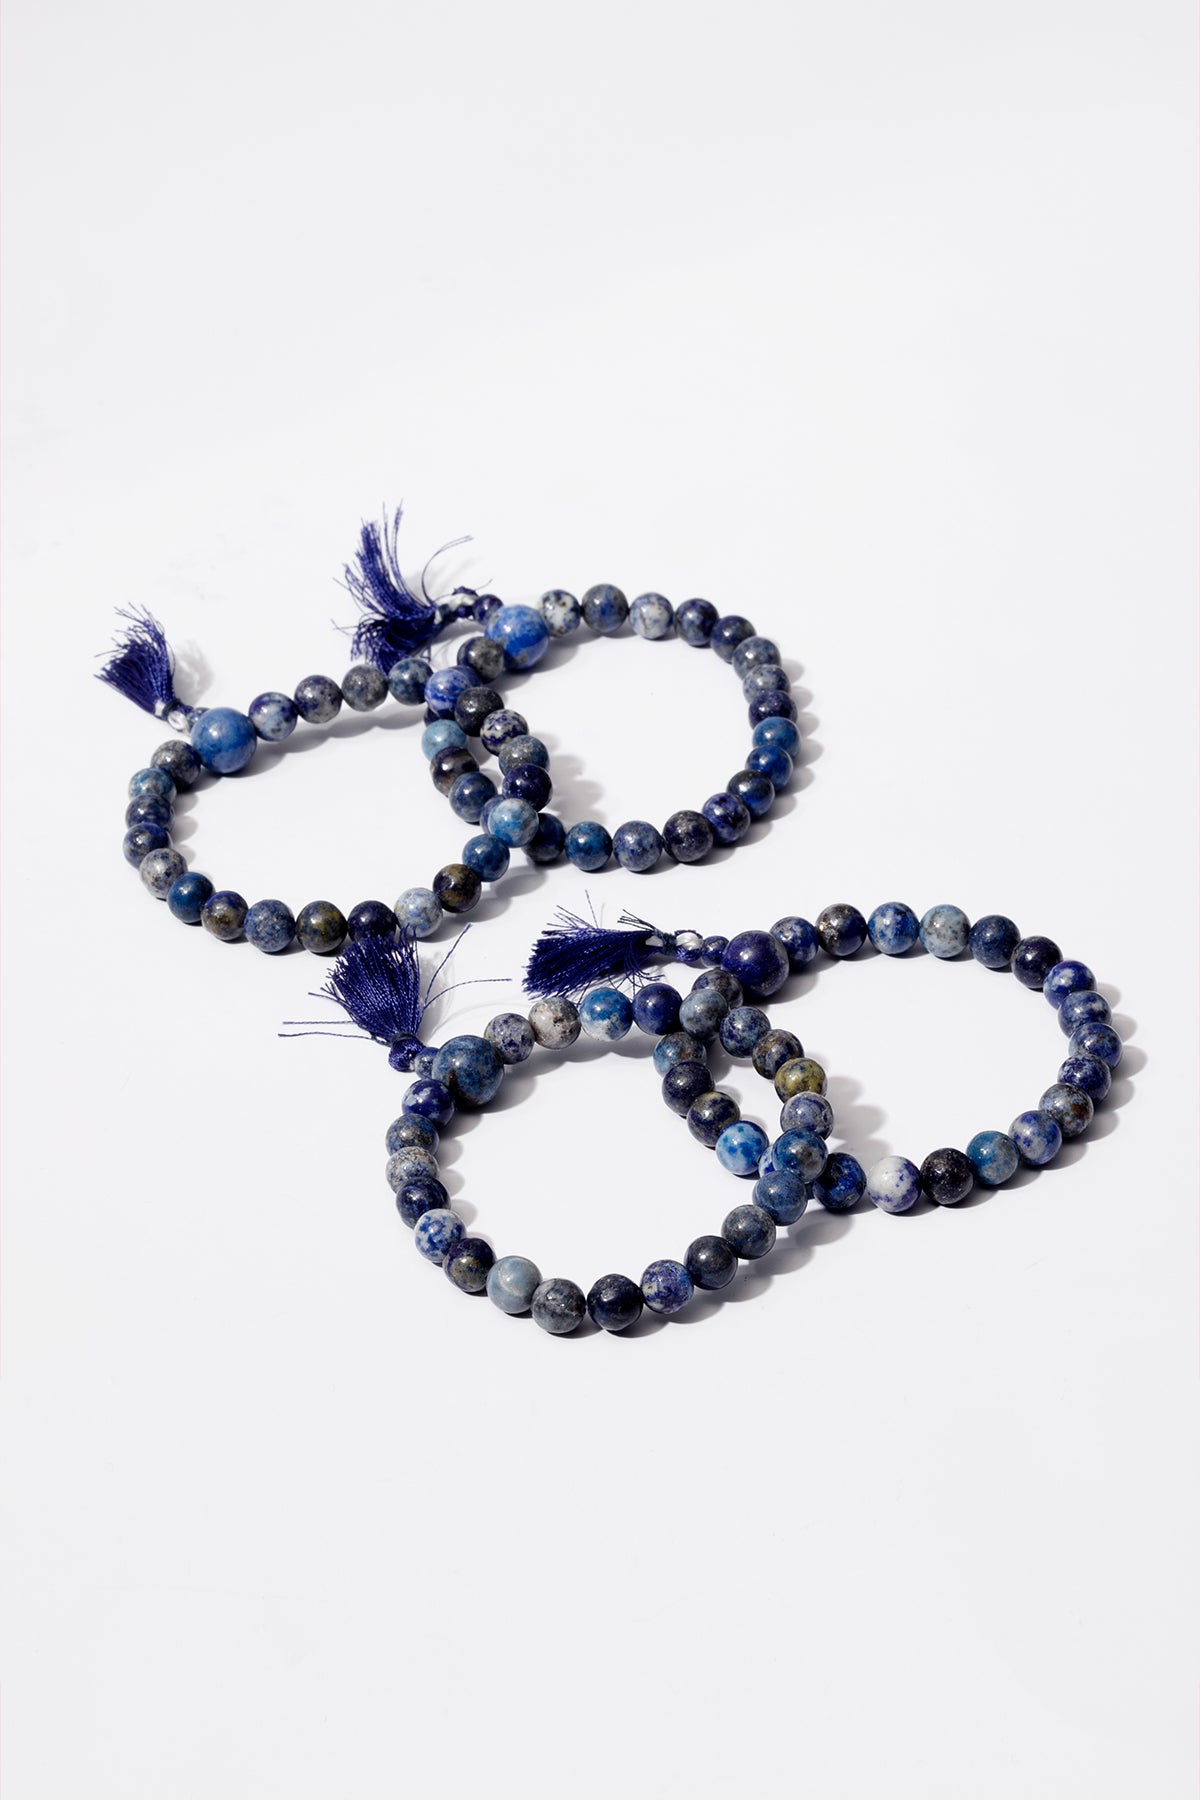 Sacred Wisdom of Lapis Lazuli